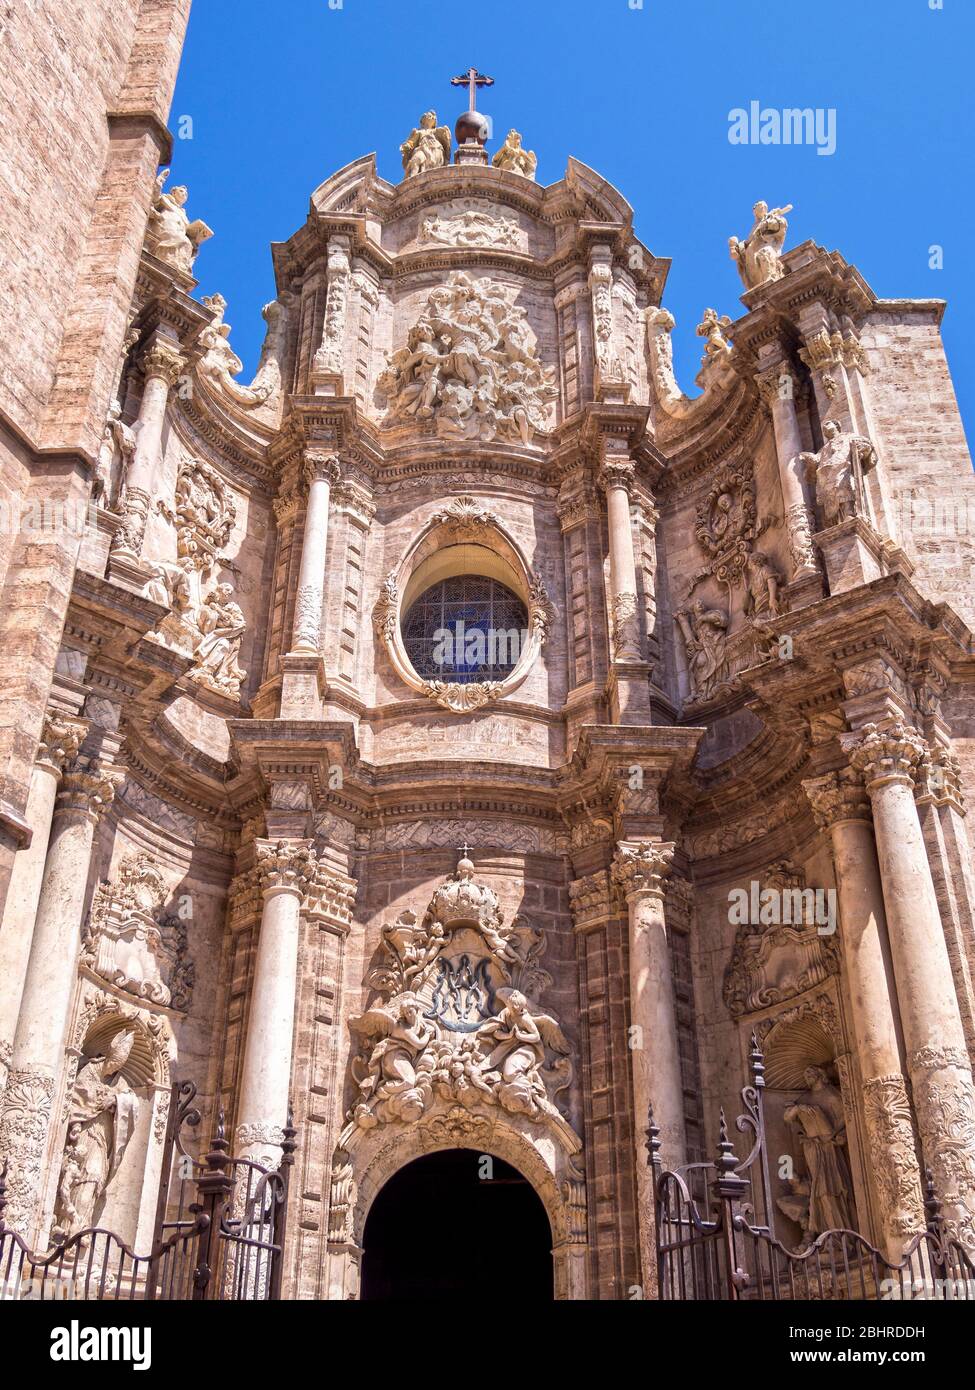 Puerta de los hierros hi-res stock photography and images - Alamy